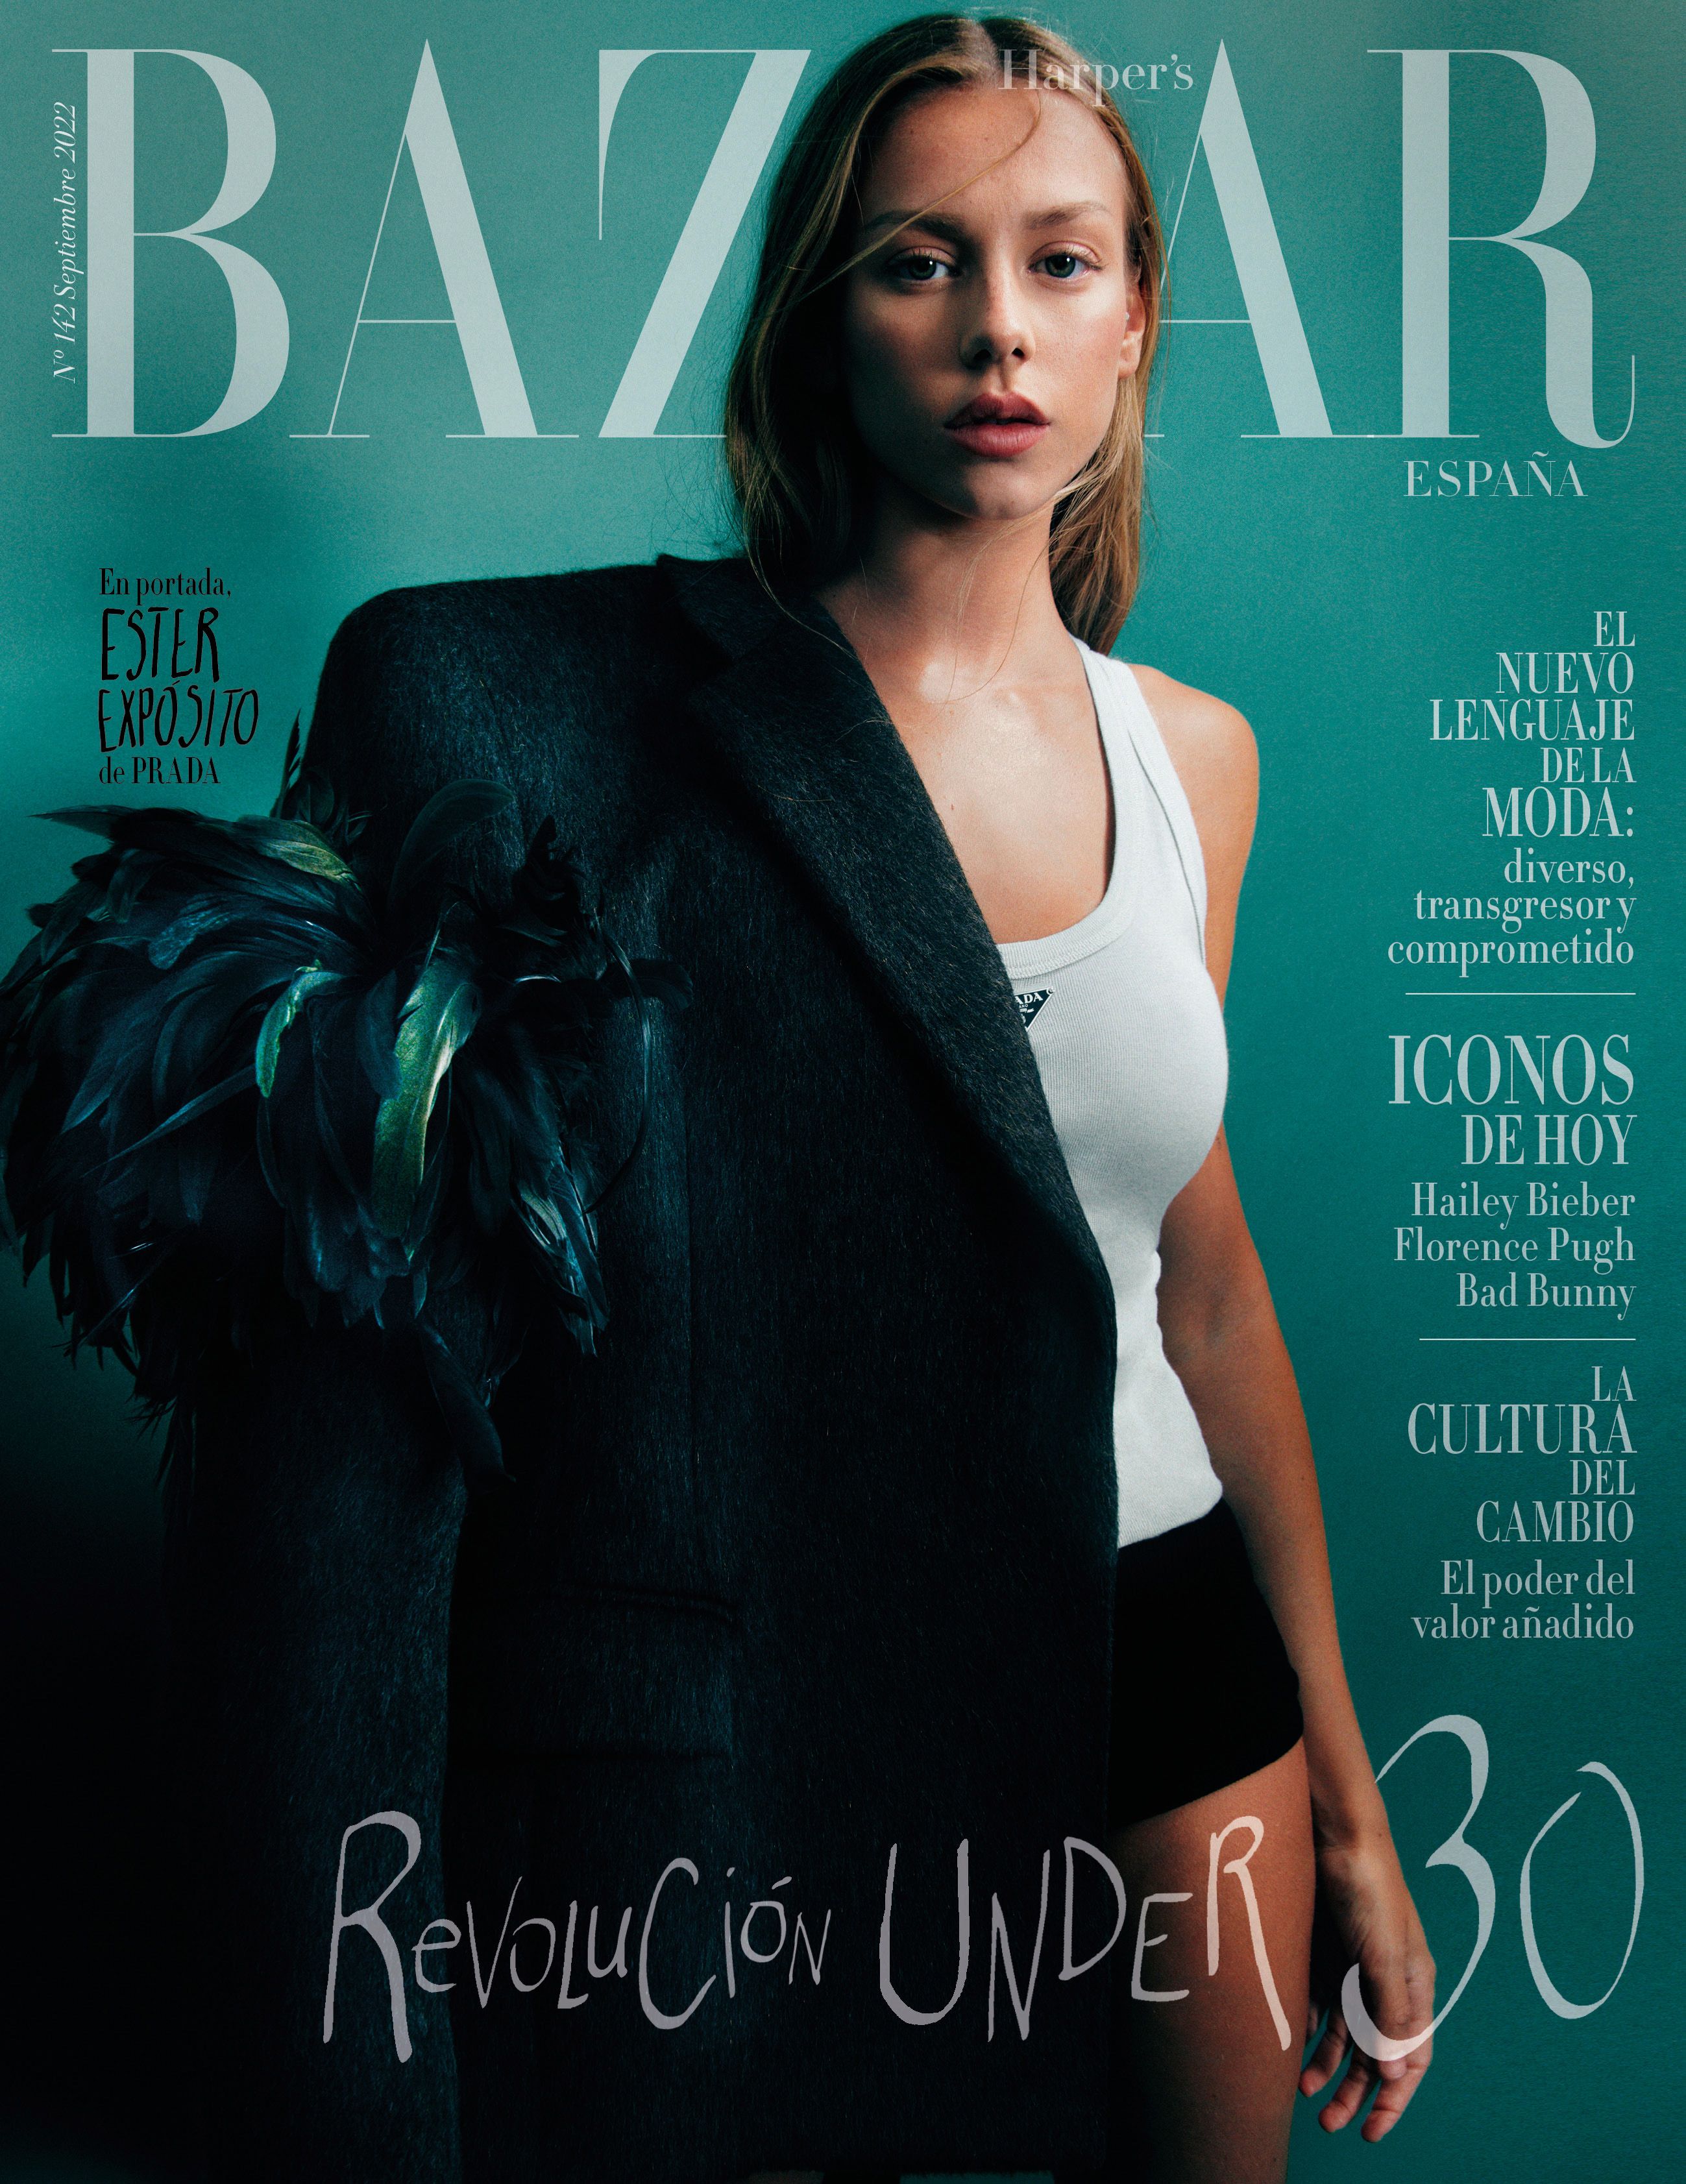 Ester Expósito, portada de Harper's Bazaar septiembre